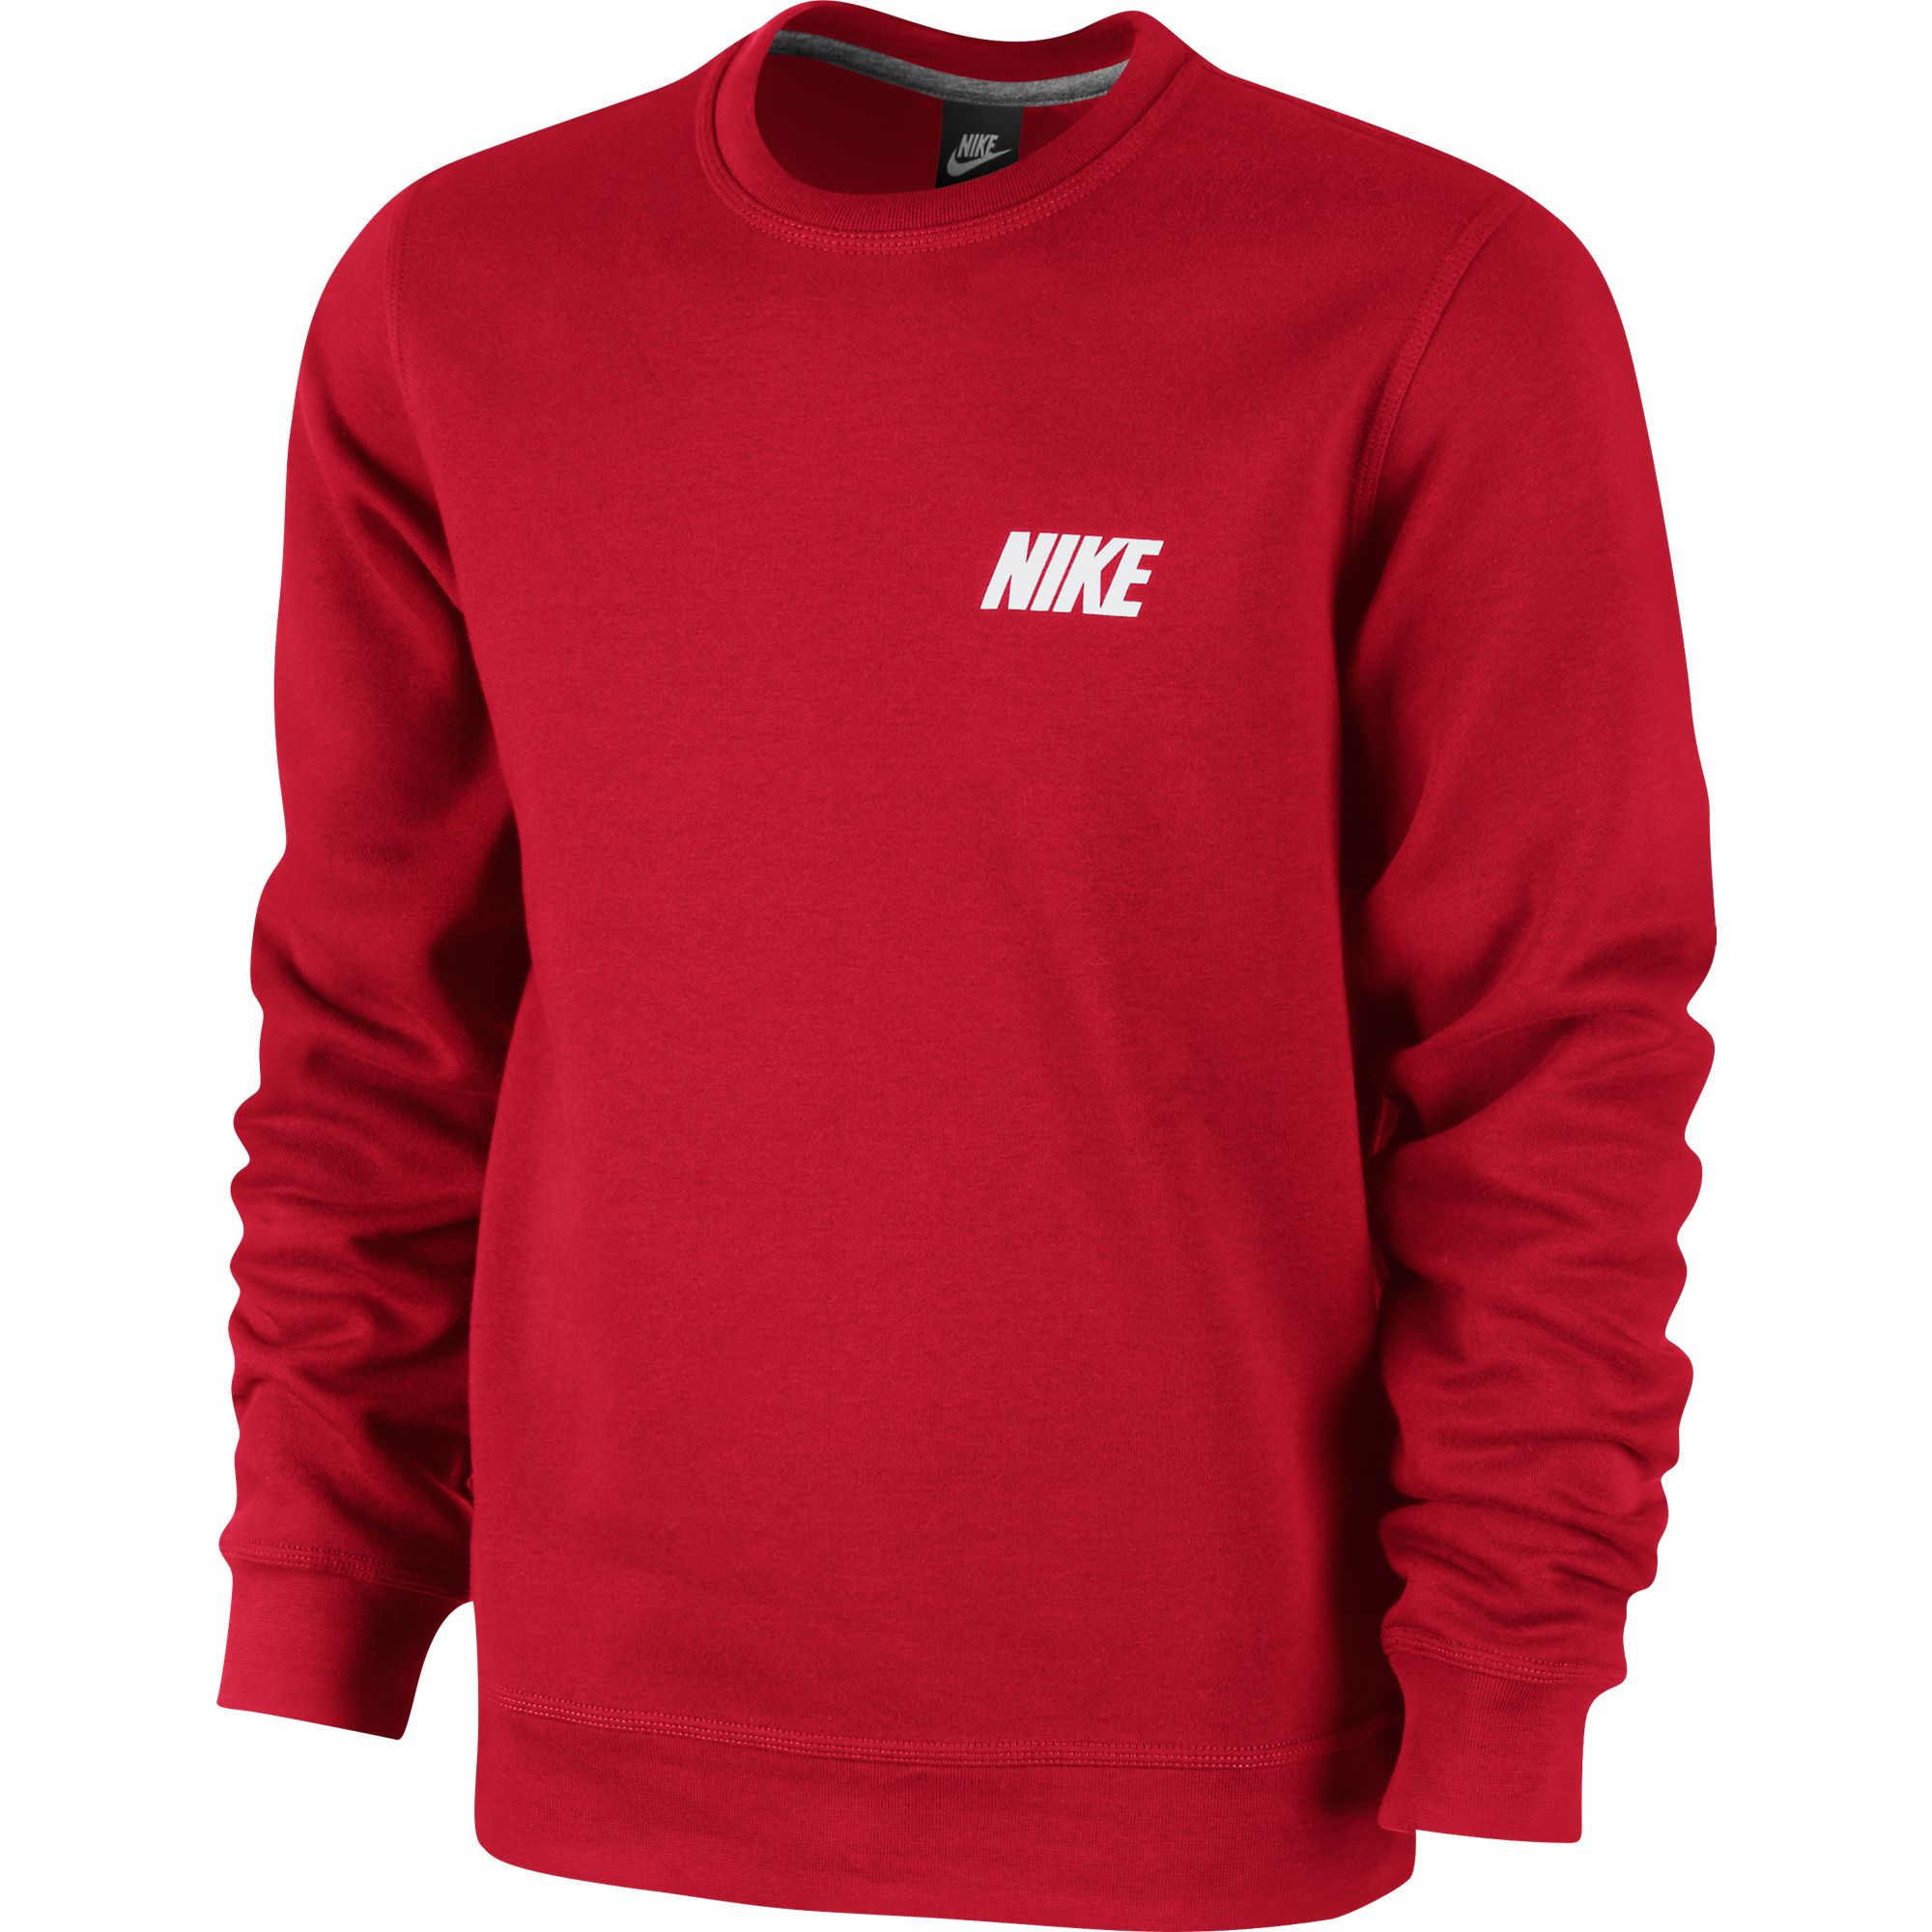 Nike Crew Neck Men's Sweatshirt Red/White 545129-611